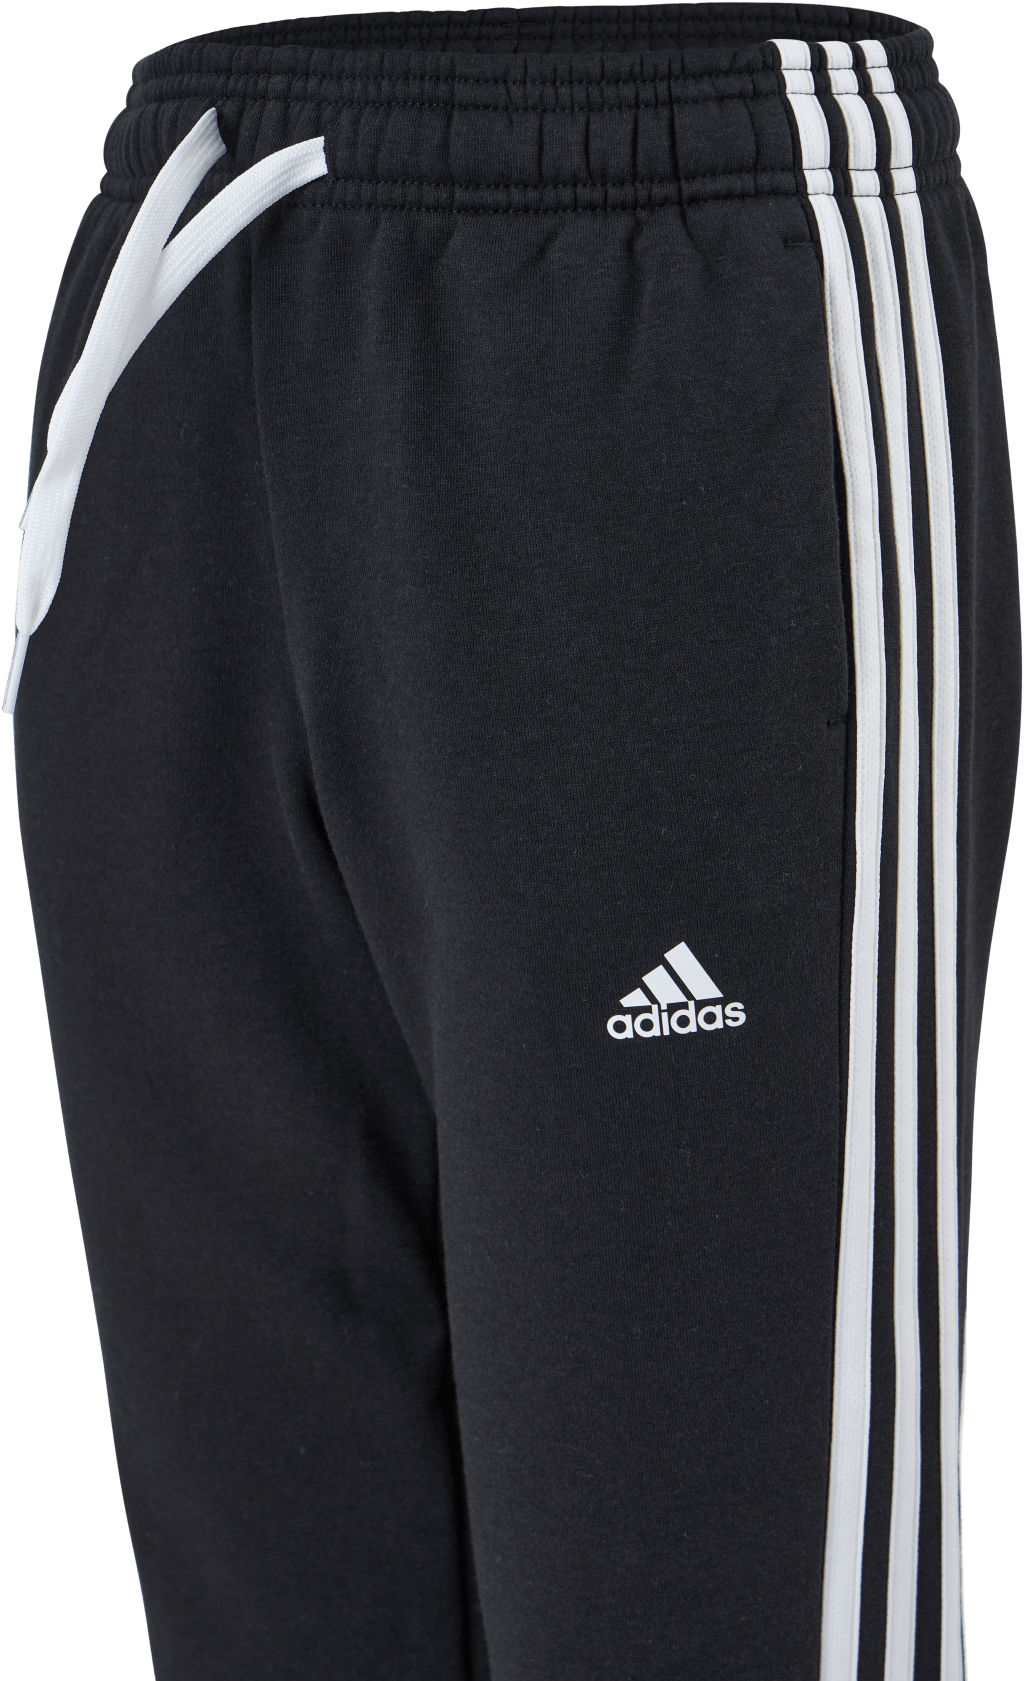 Adidas Boys Essentials 3 Stripes Pant Black / White